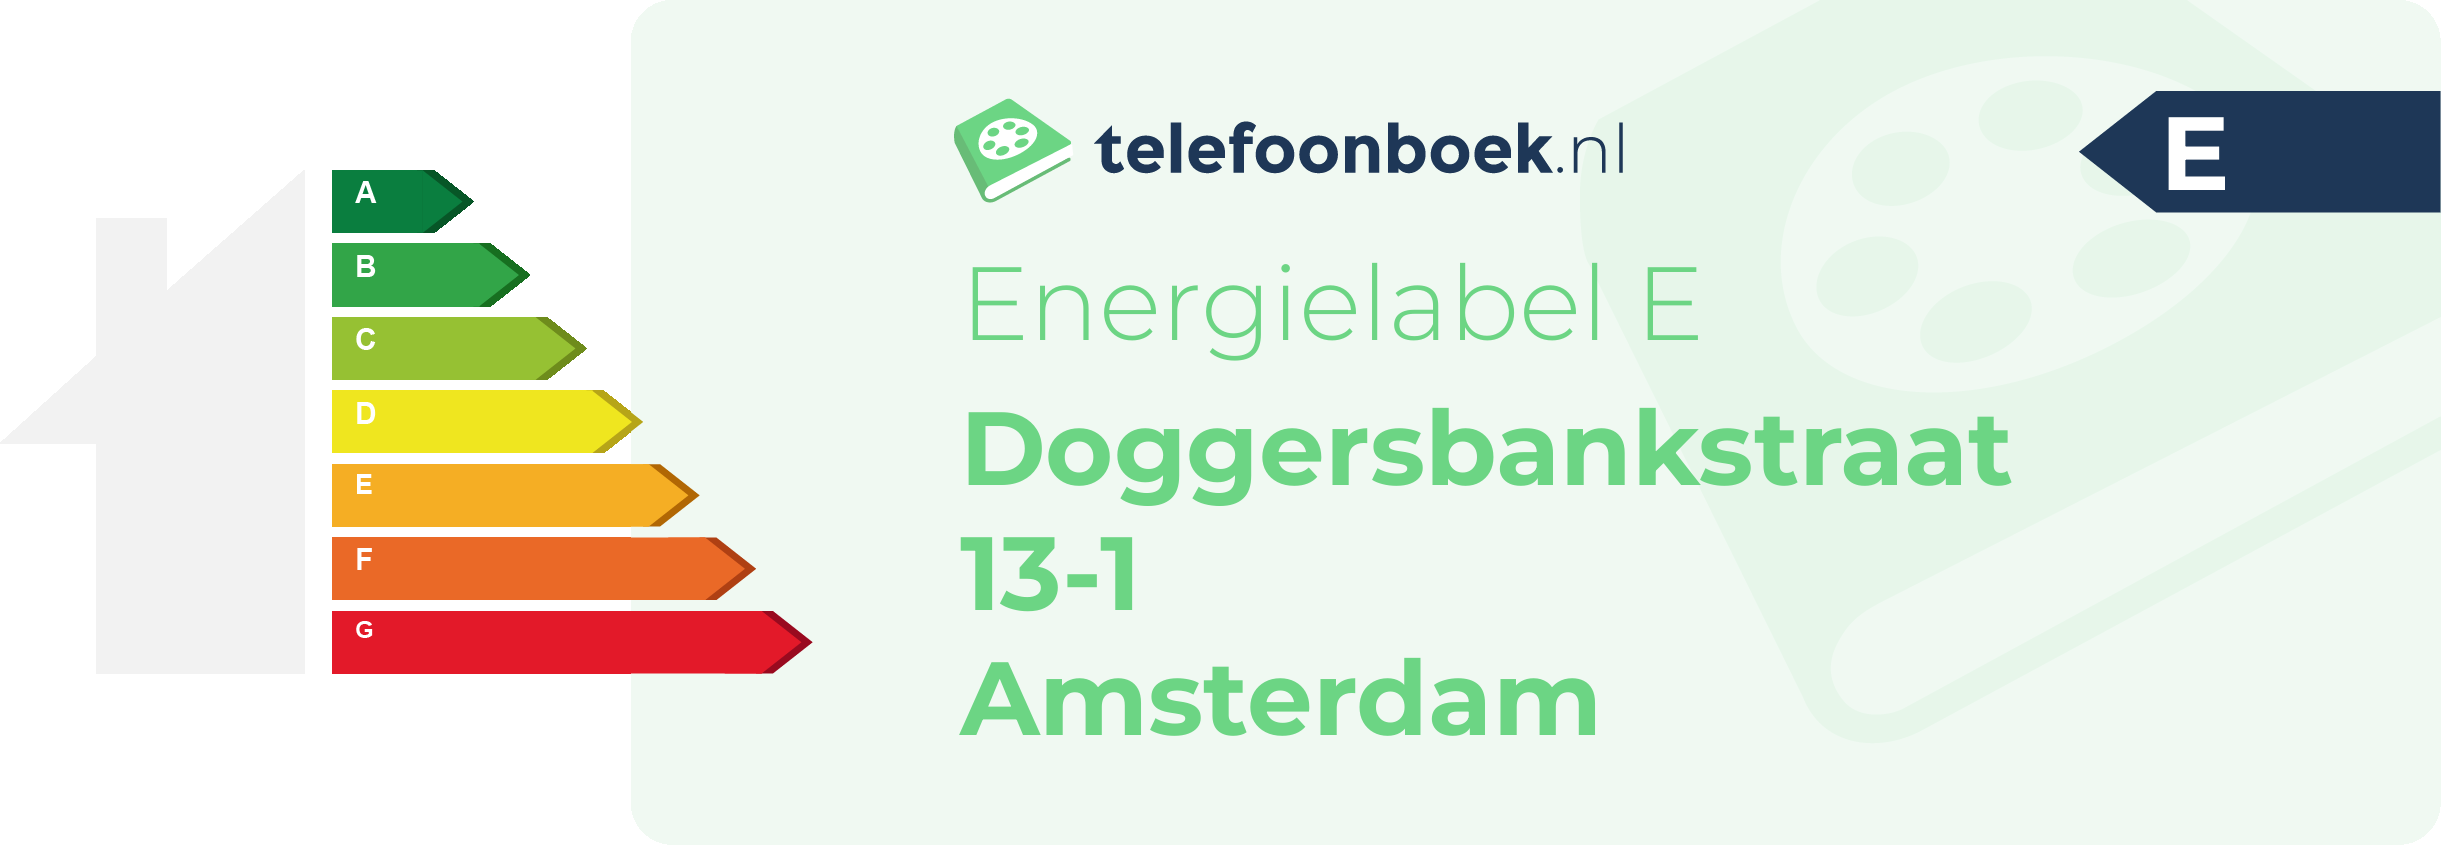 Energielabel Doggersbankstraat 13-1 Amsterdam